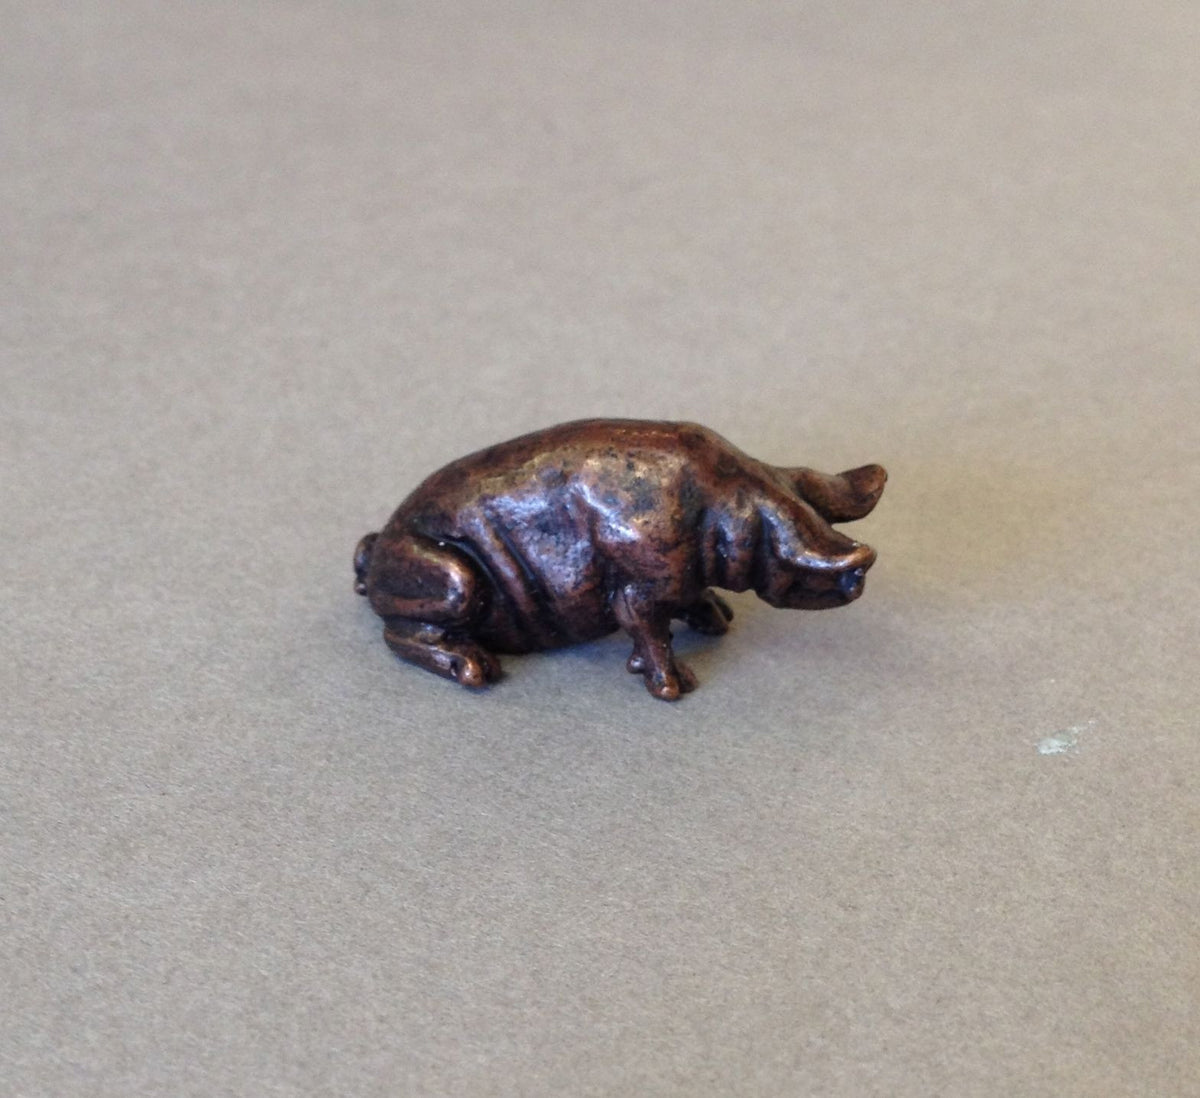 Miniature Pig by David Meredith